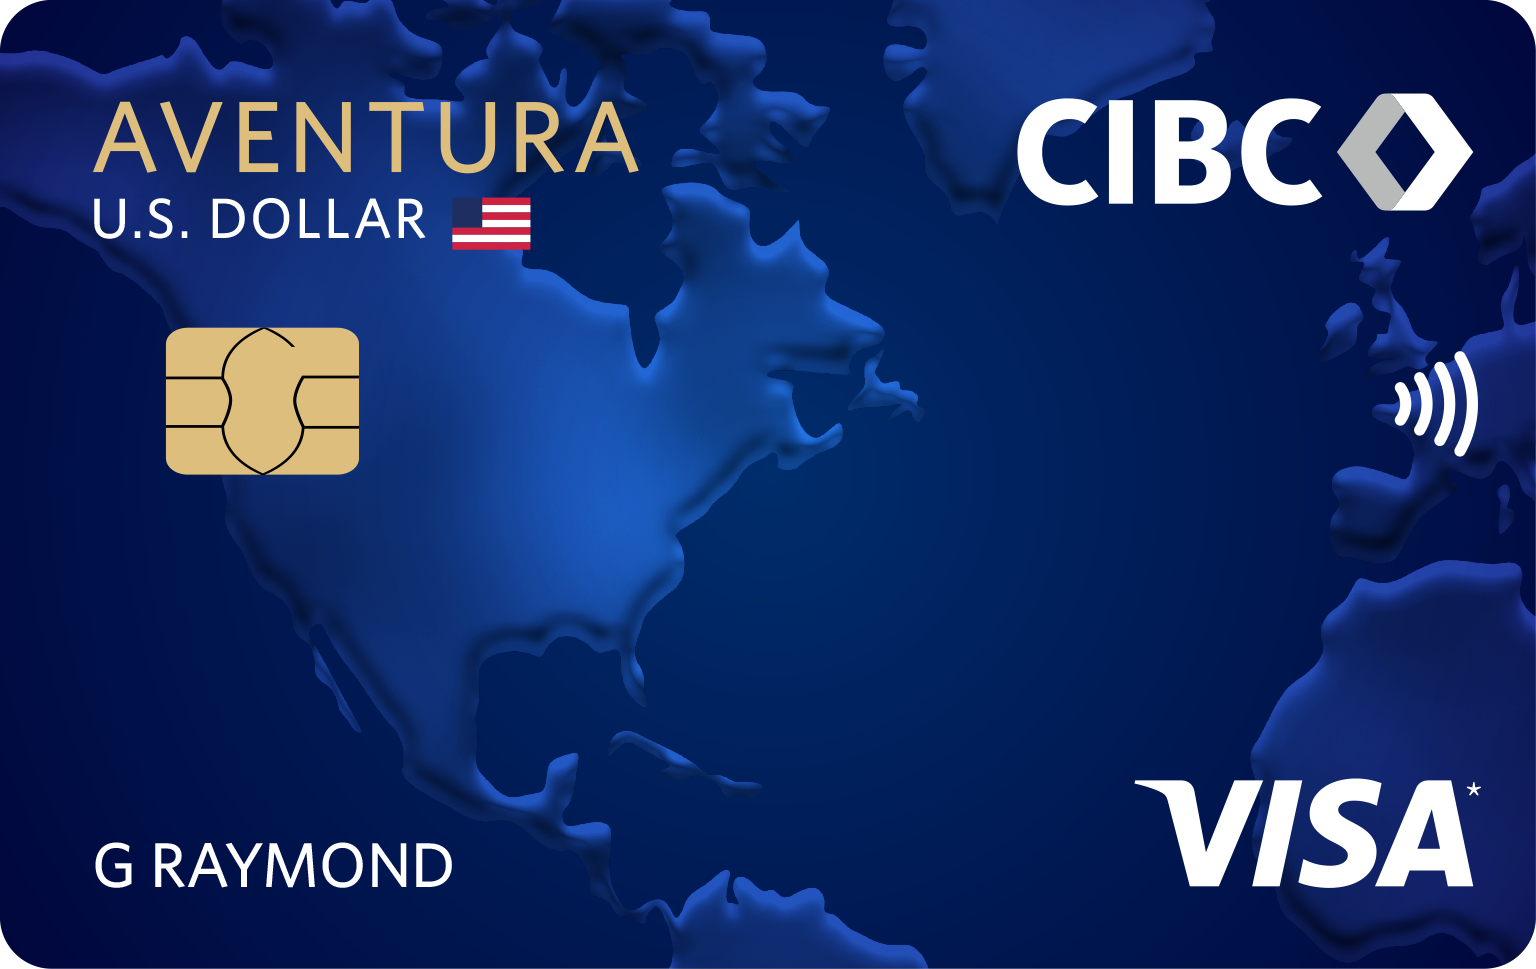 CIBC U.S. Dollar Aventura® Gold Visa* Card